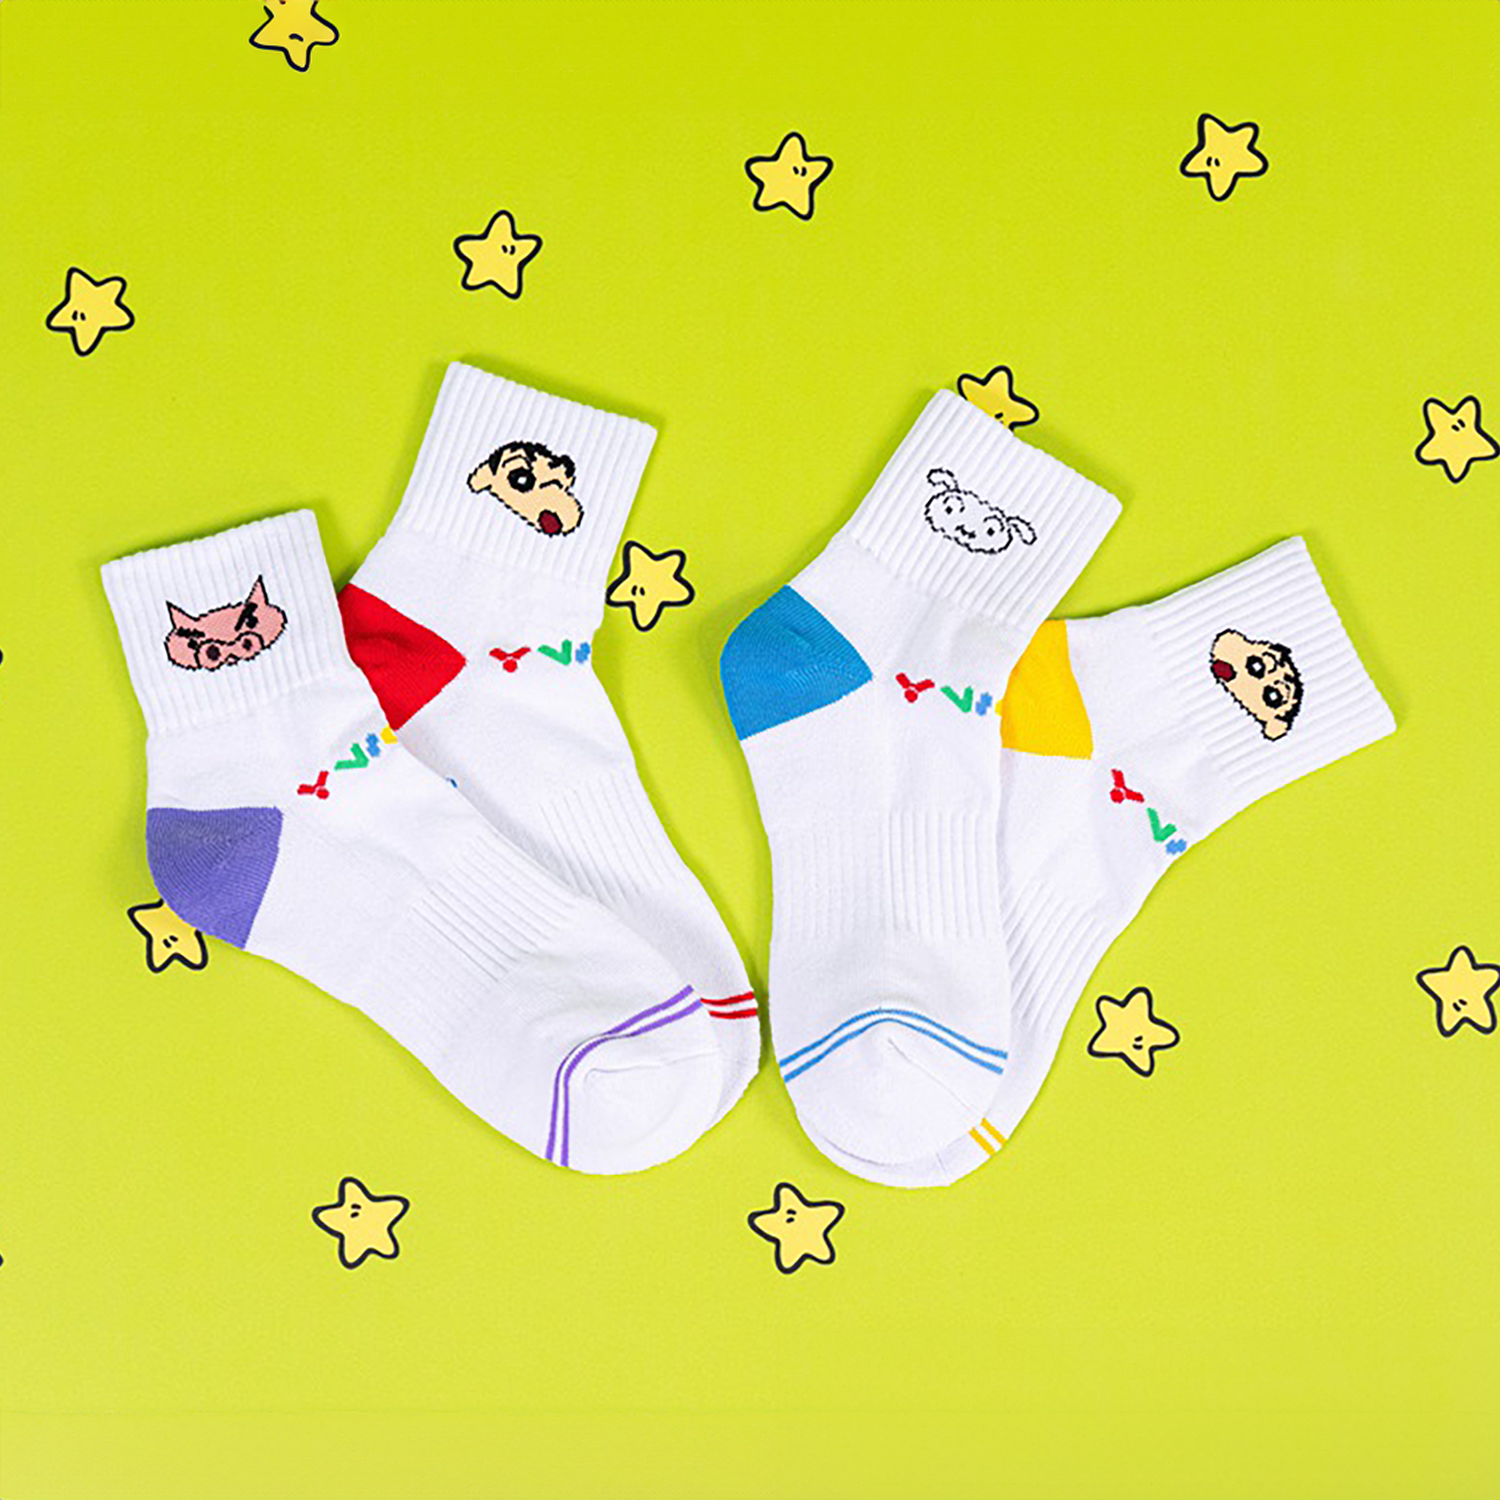 Victor x Crayon Shin Chan Junior Sports Socks SK-410CS-ME (Blue/Yellow)